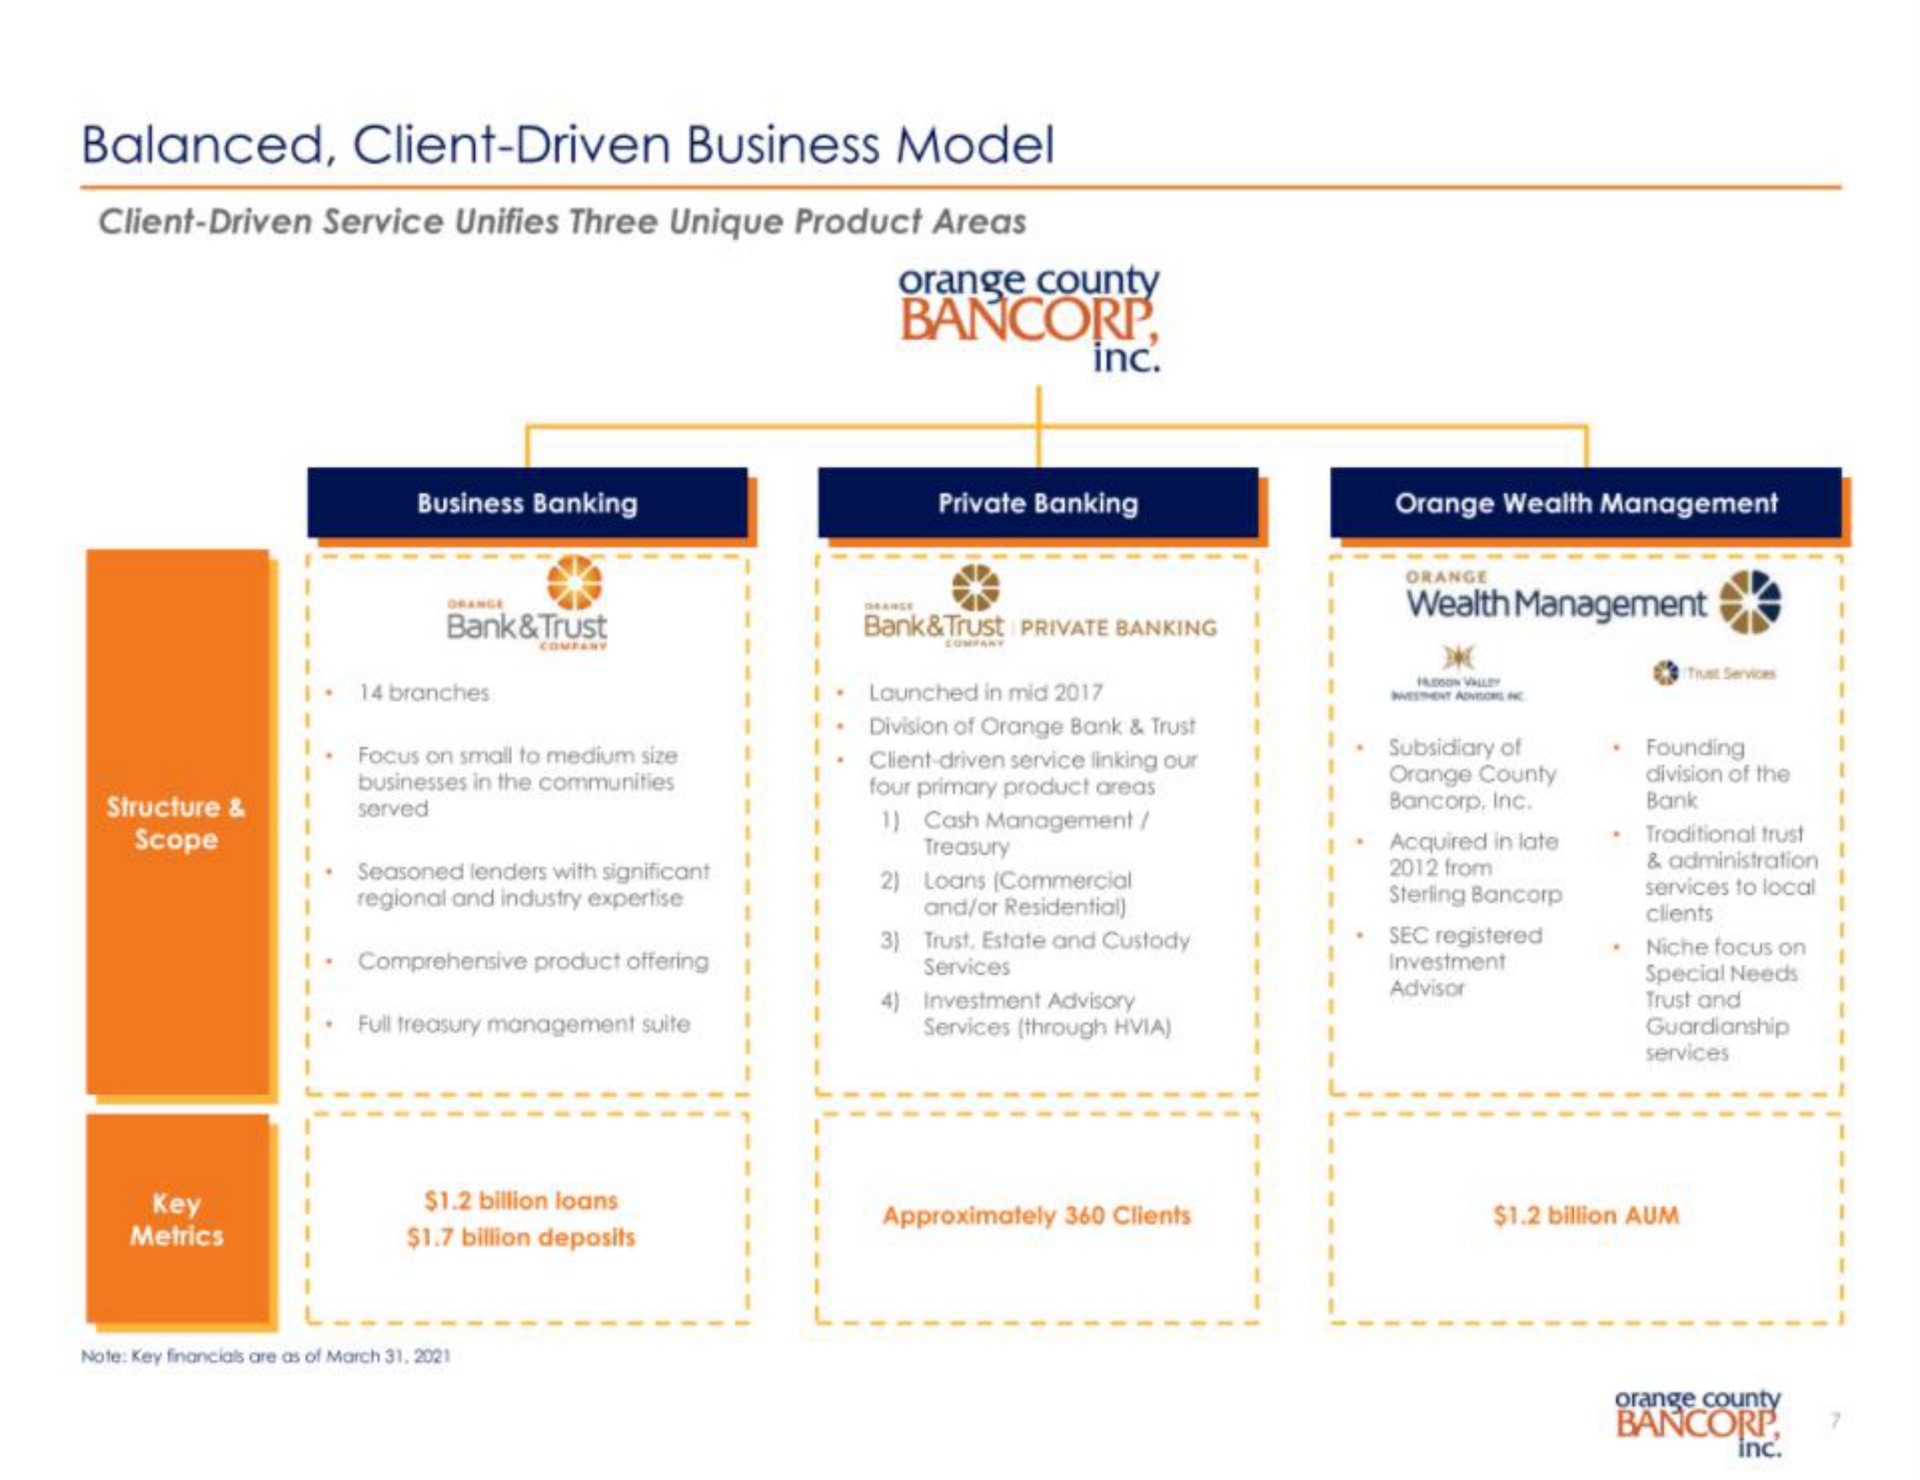 balanced client driven business model canes wealth management | Orange County Bancorp